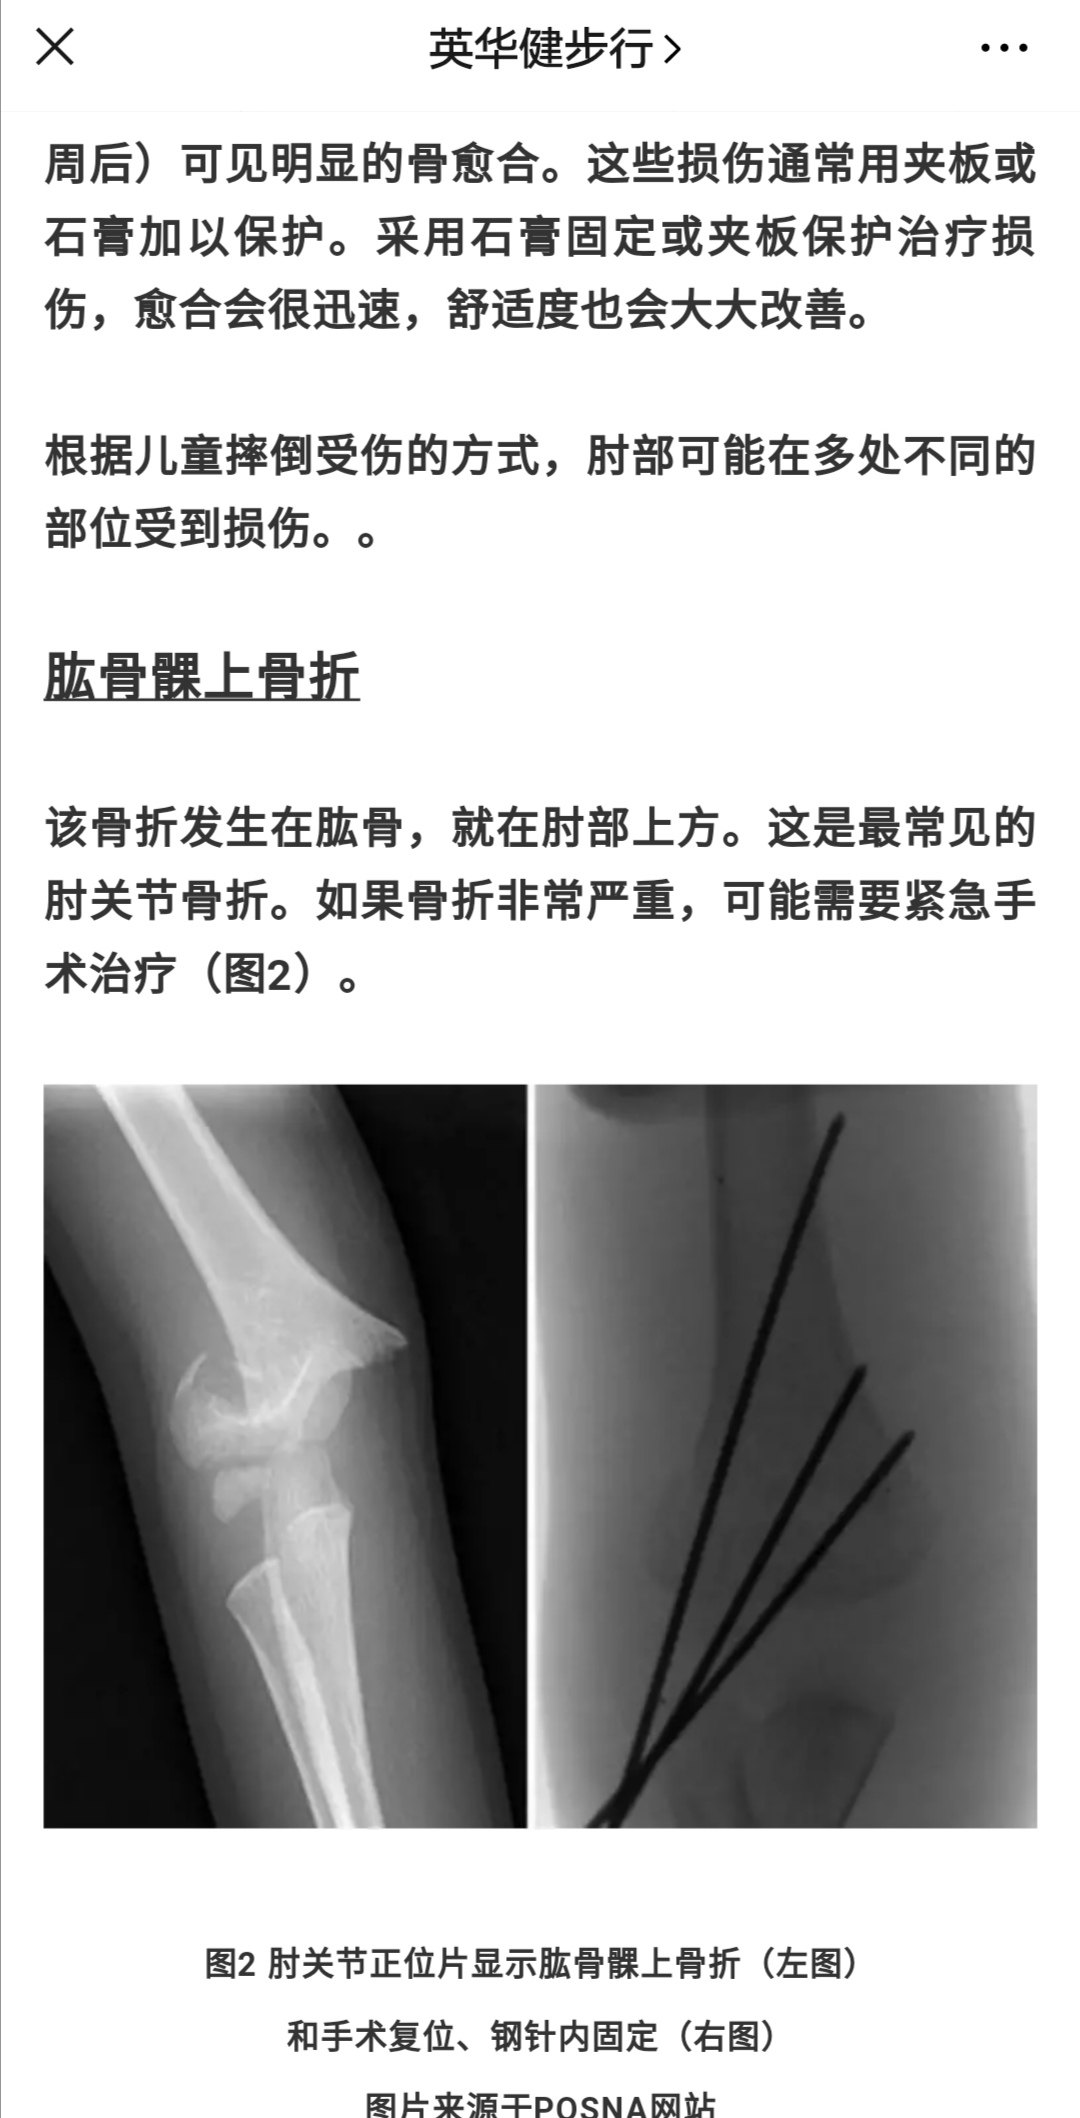 肘部骨折elbowfractures